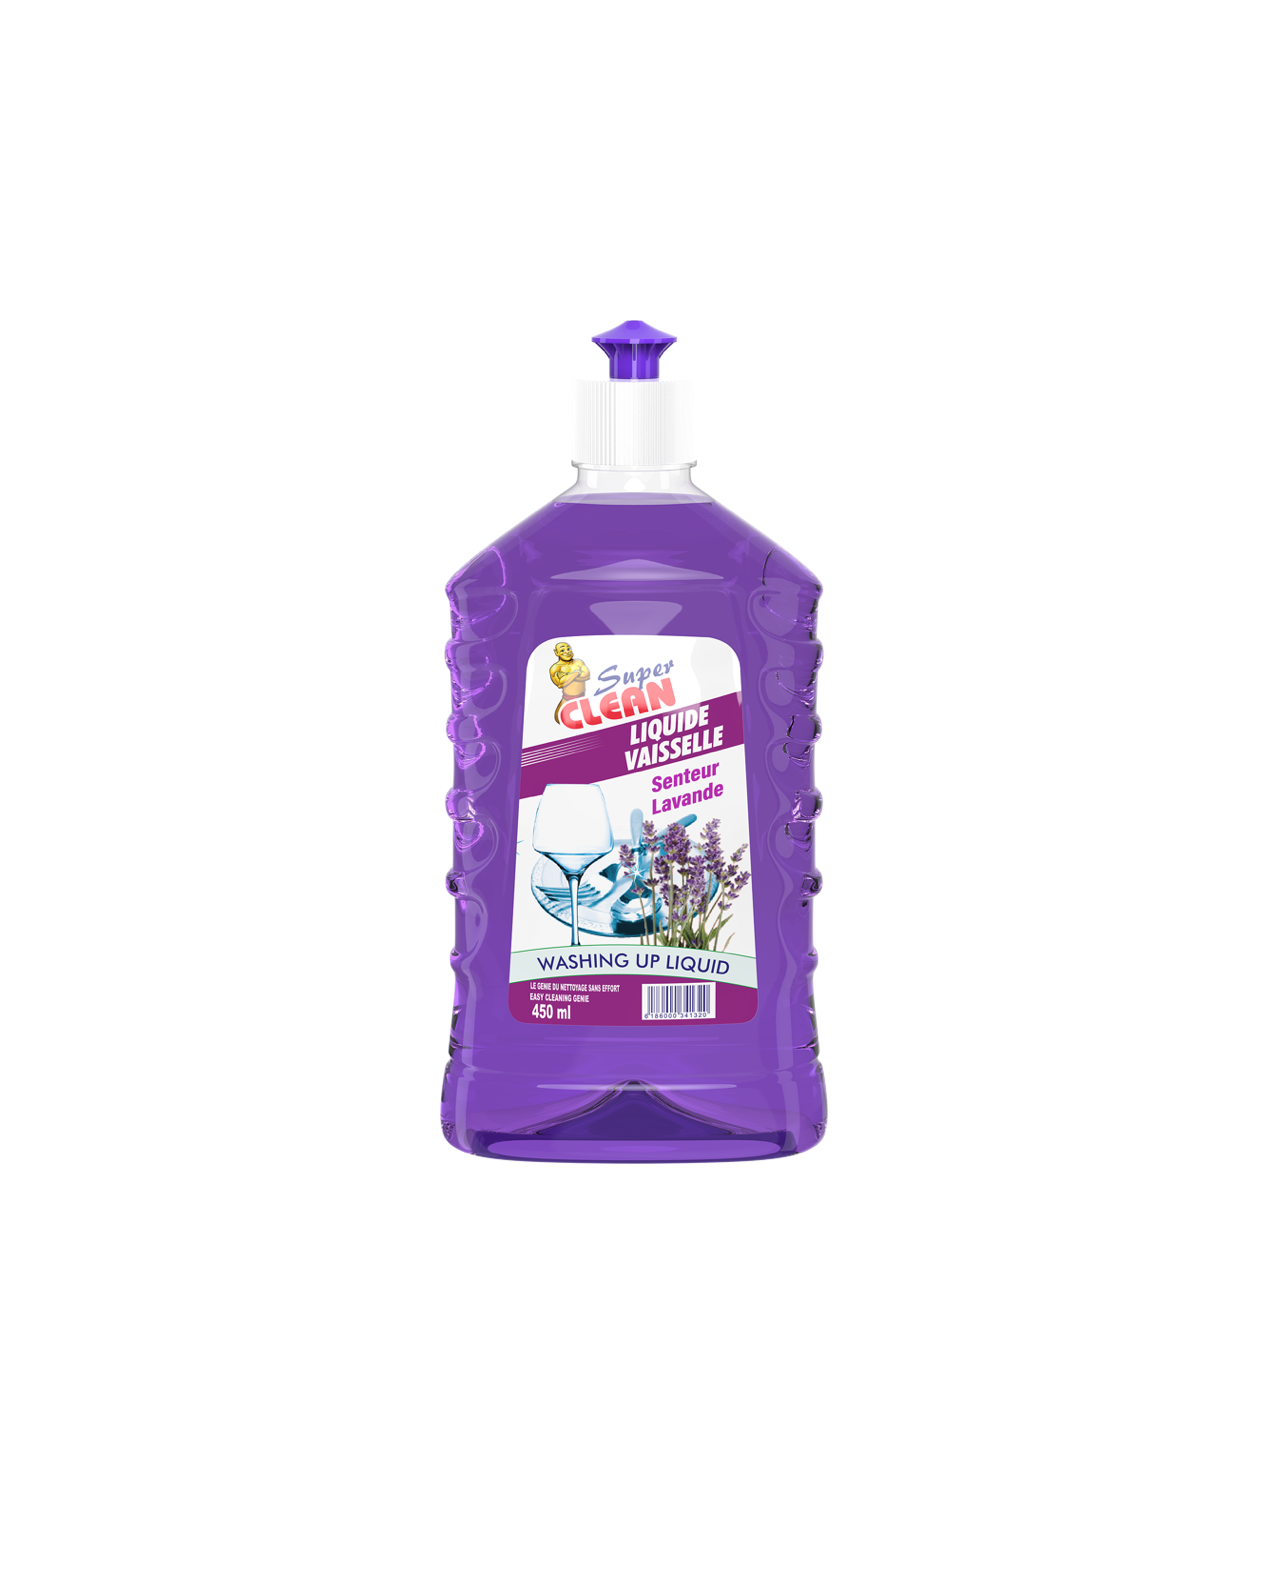 SUPER CLEAN_Liquide Vaisselle Lavande 450ml_Siprochim